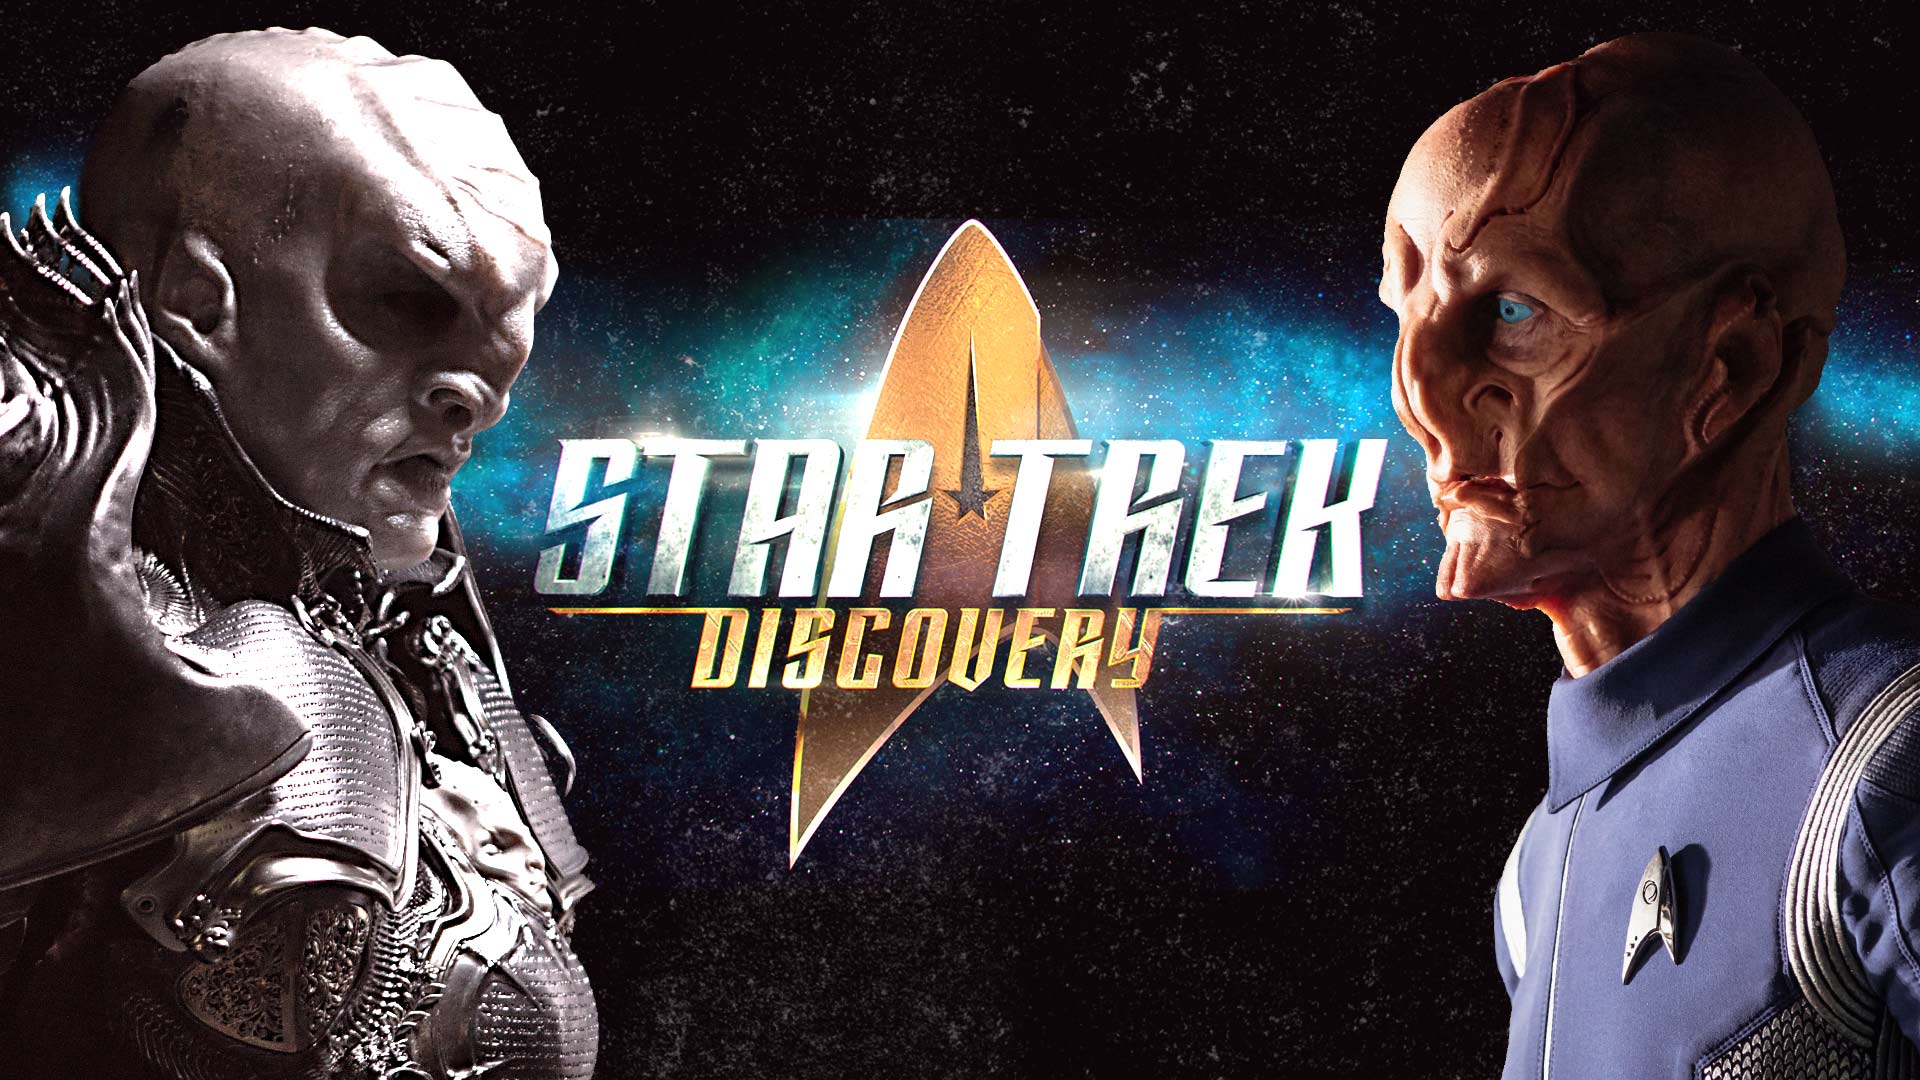 HD wallpaper featuring an alien and a Starfleet officer from the sci-fi series Star Trek: Discovery.